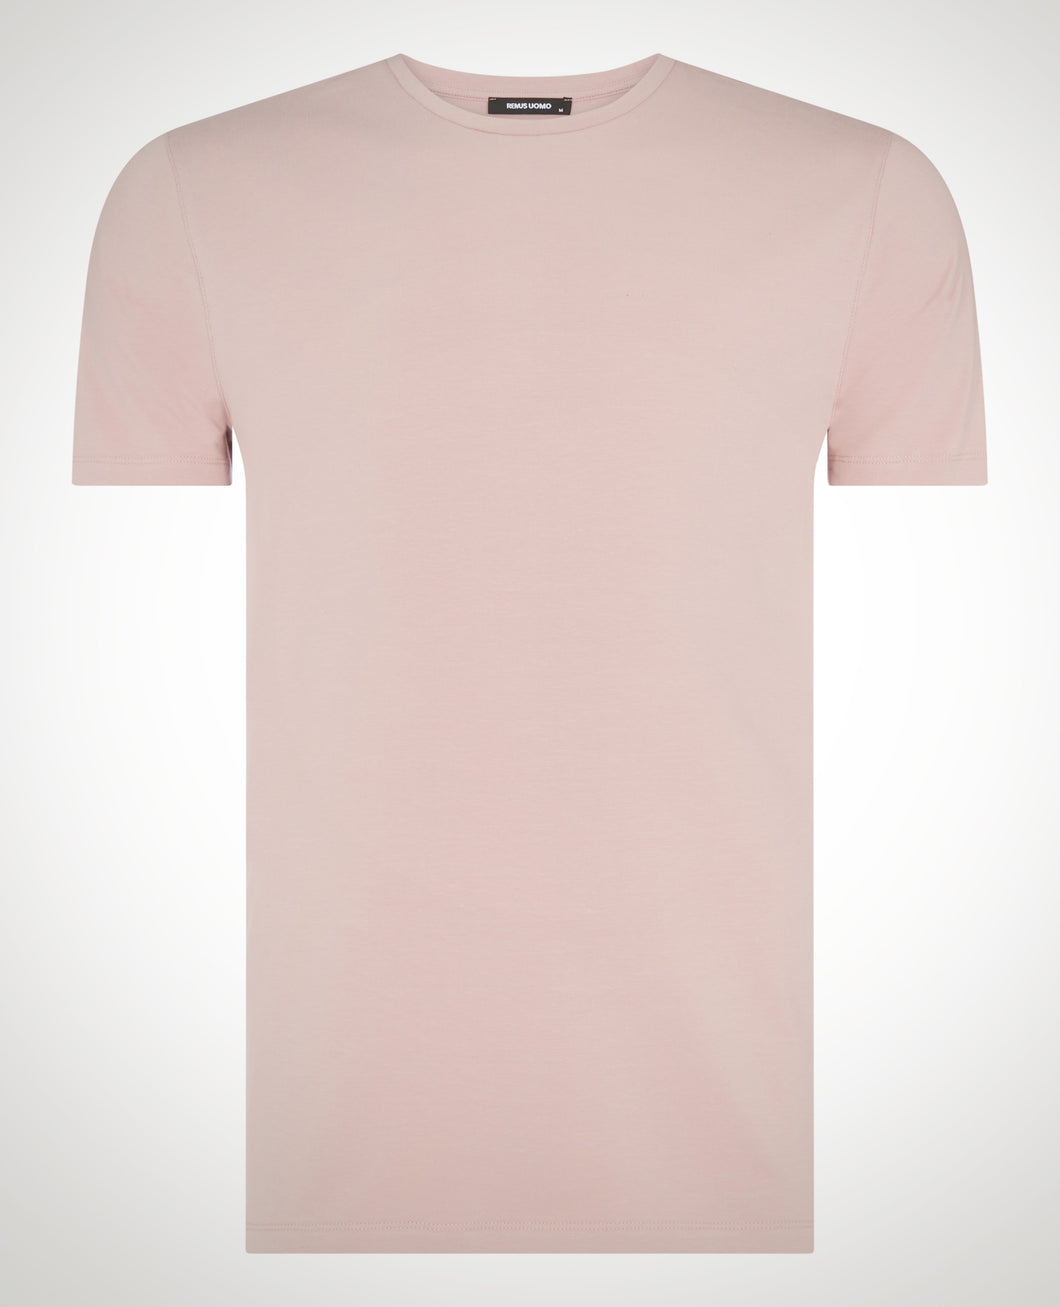 REMUS UOMO Stretch Cotton T Shirt in Pink 133-53121